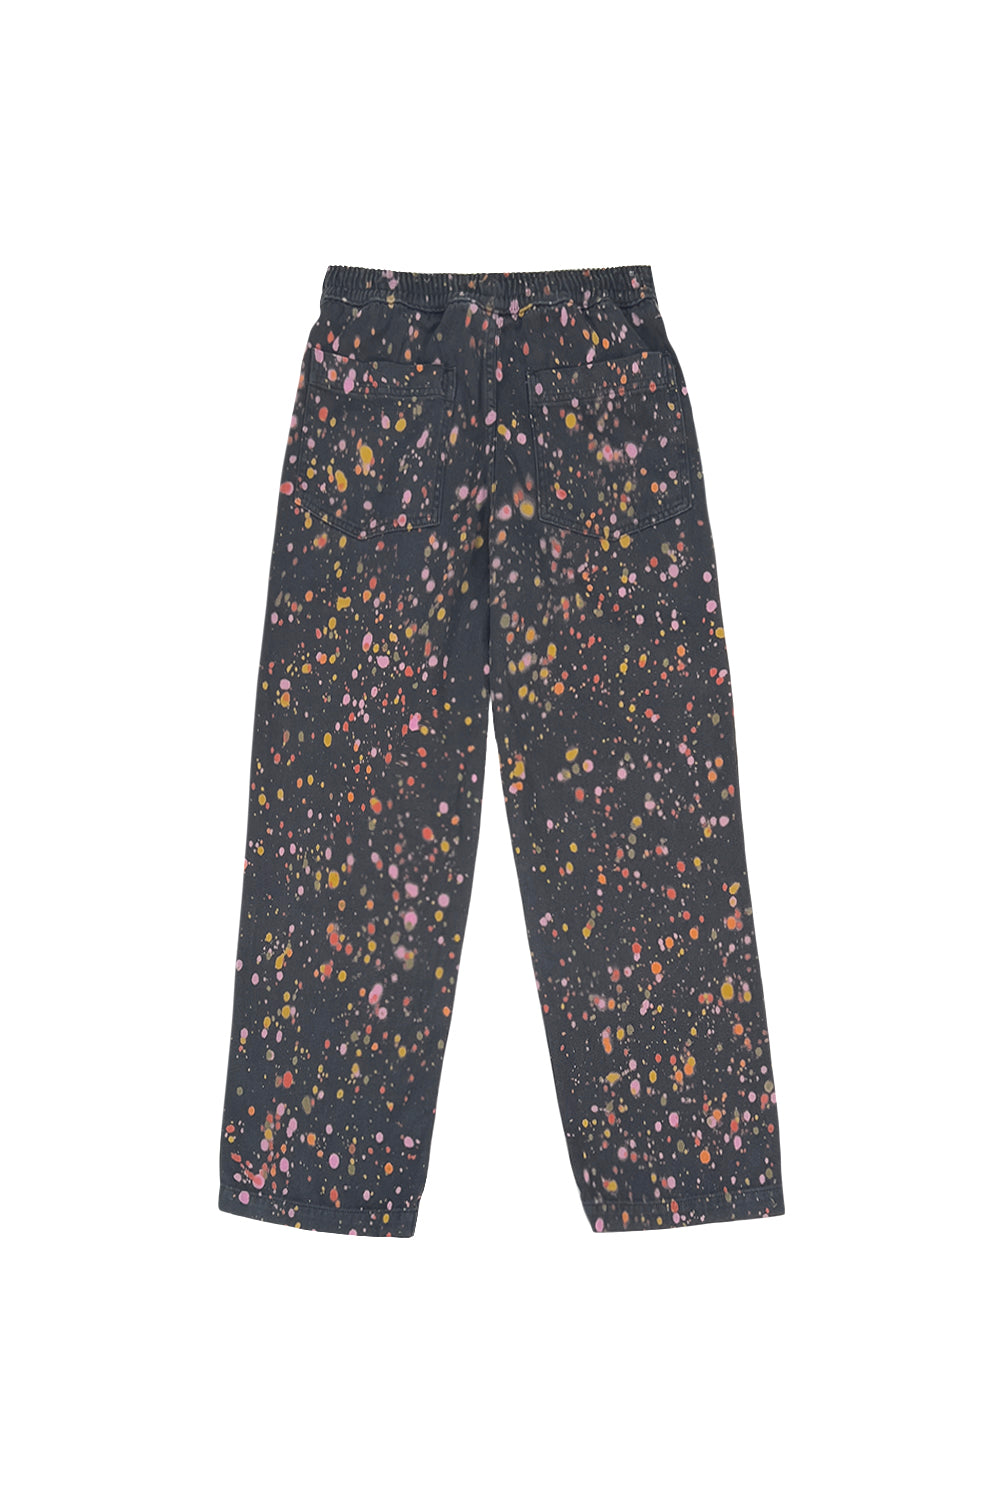 Splatter Ocean Pant | Jungmaven Hemp Clothing & Accessories / Color: Back